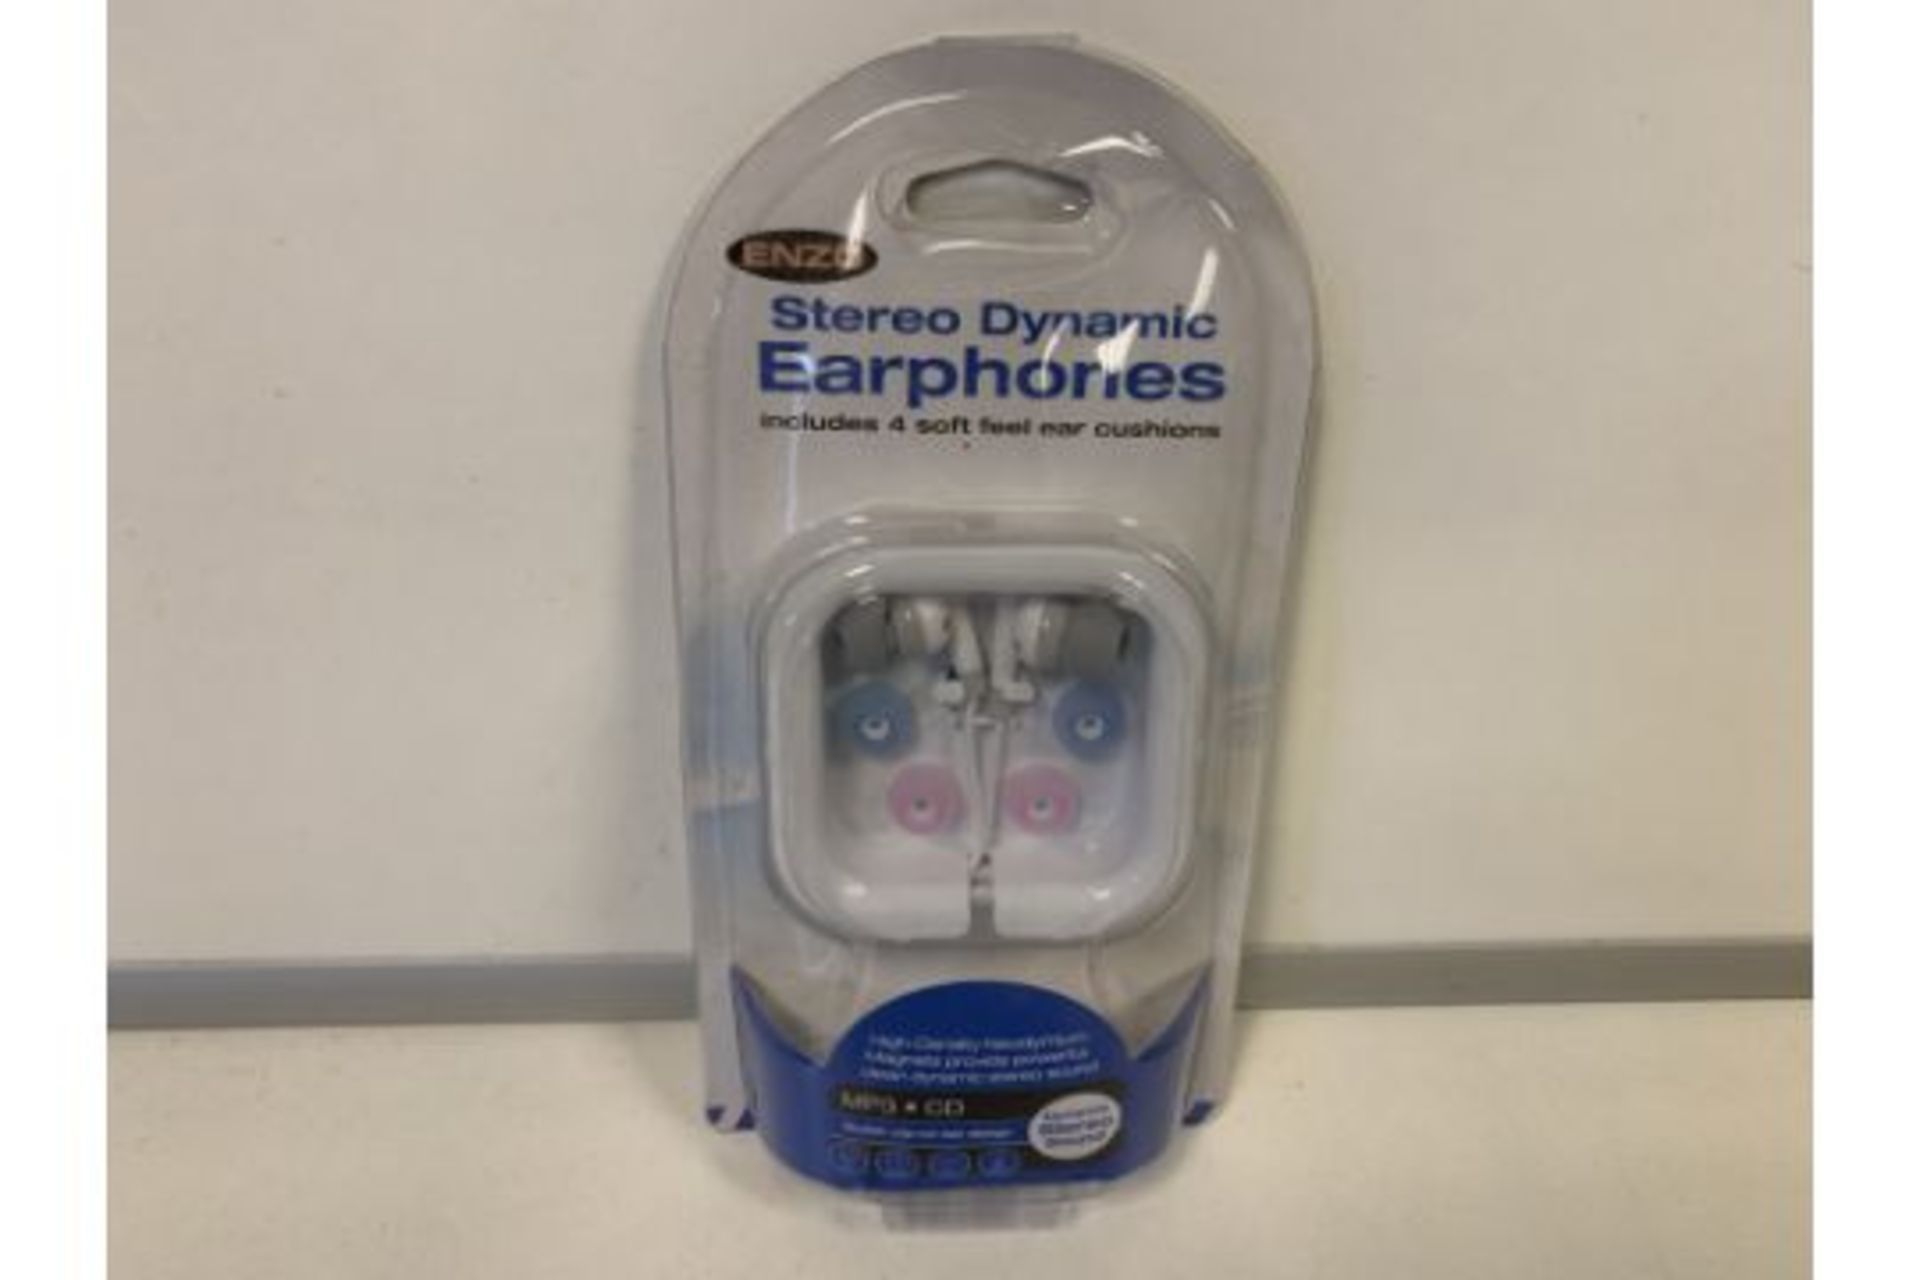 60 X BRAND NEW ENZO STEREO DYNAMIC EARPHONES INCLUDING 4 SOFT FEEL EAR CUSHIONS (1007/30)